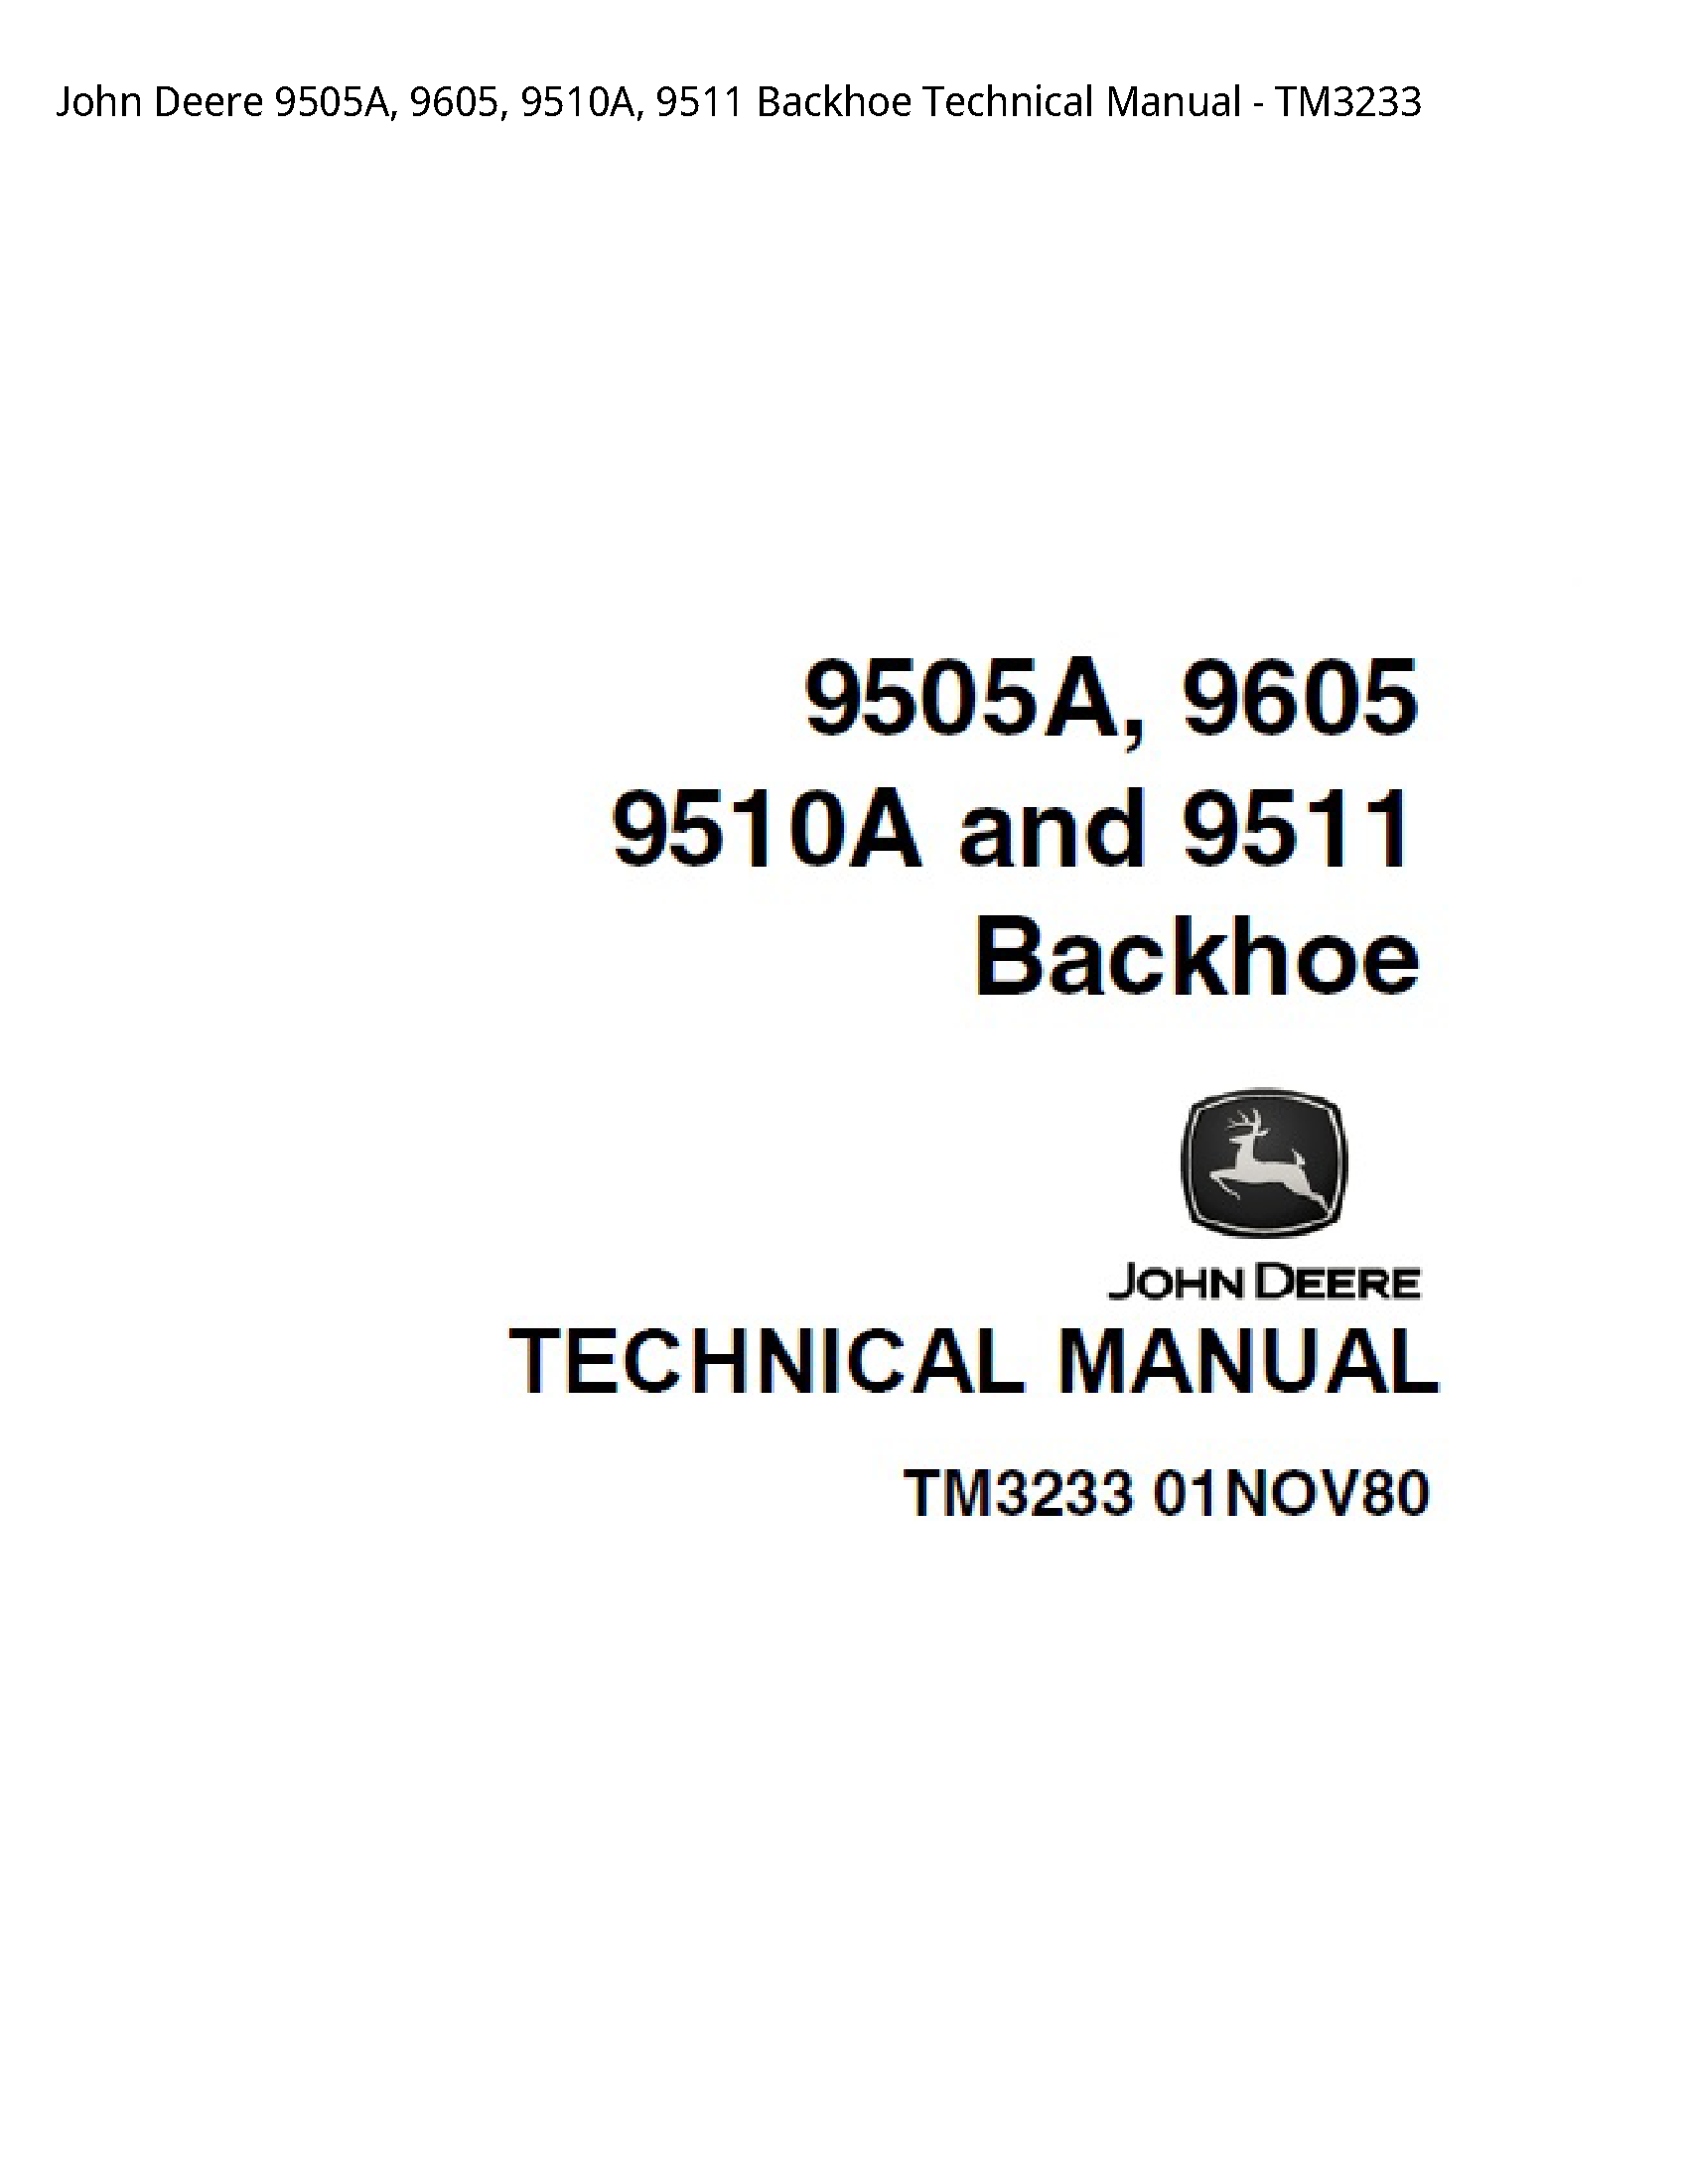 John Deere 9505A Backhoe Technical manual